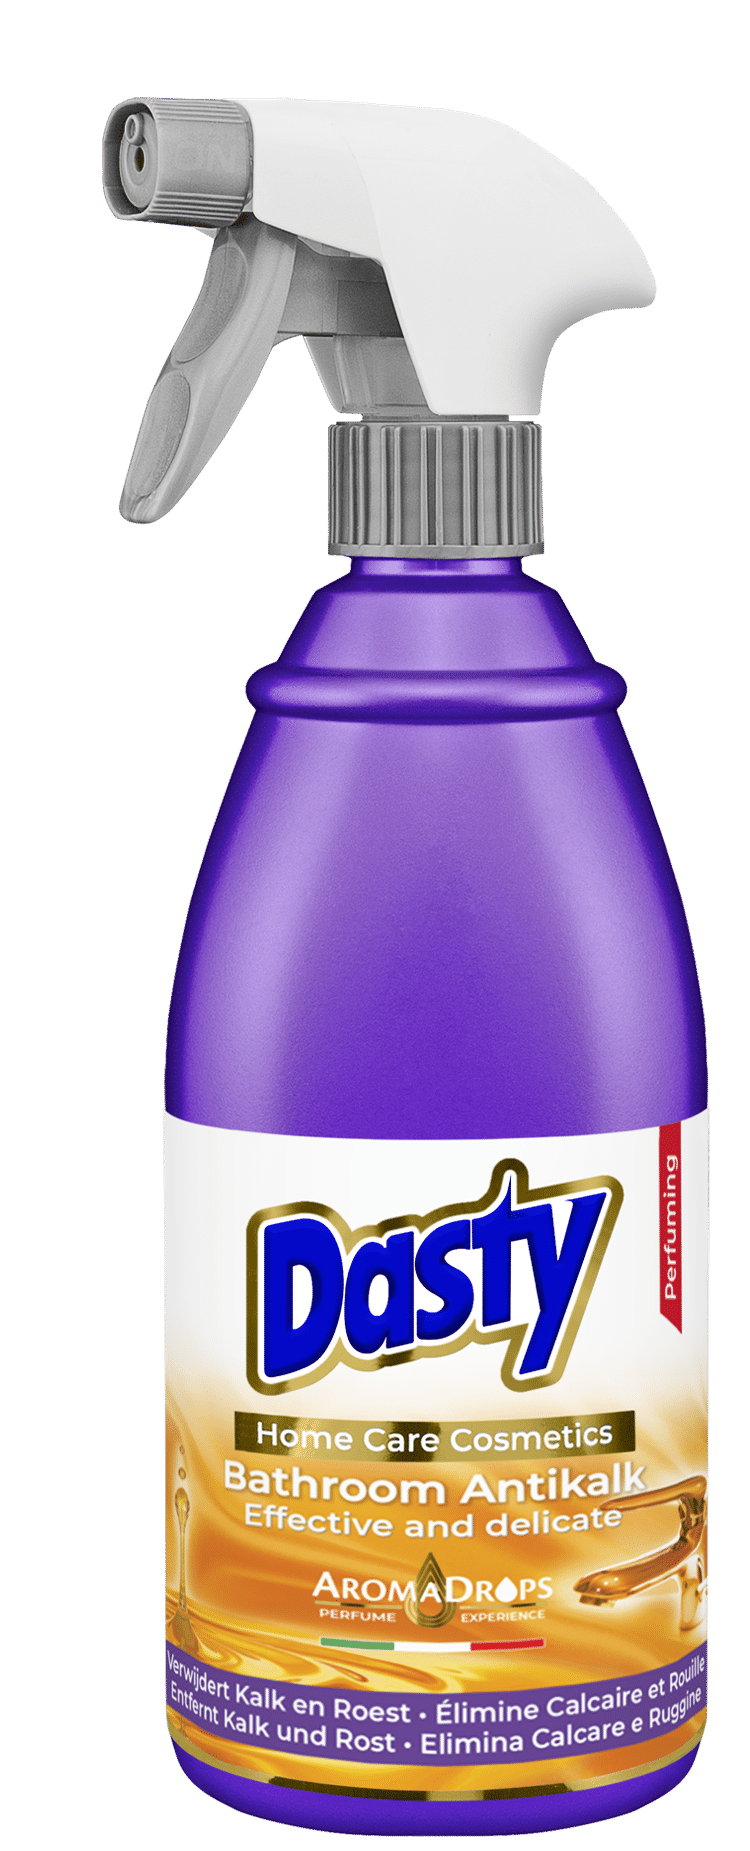 Dasty Home Care Cosmetics